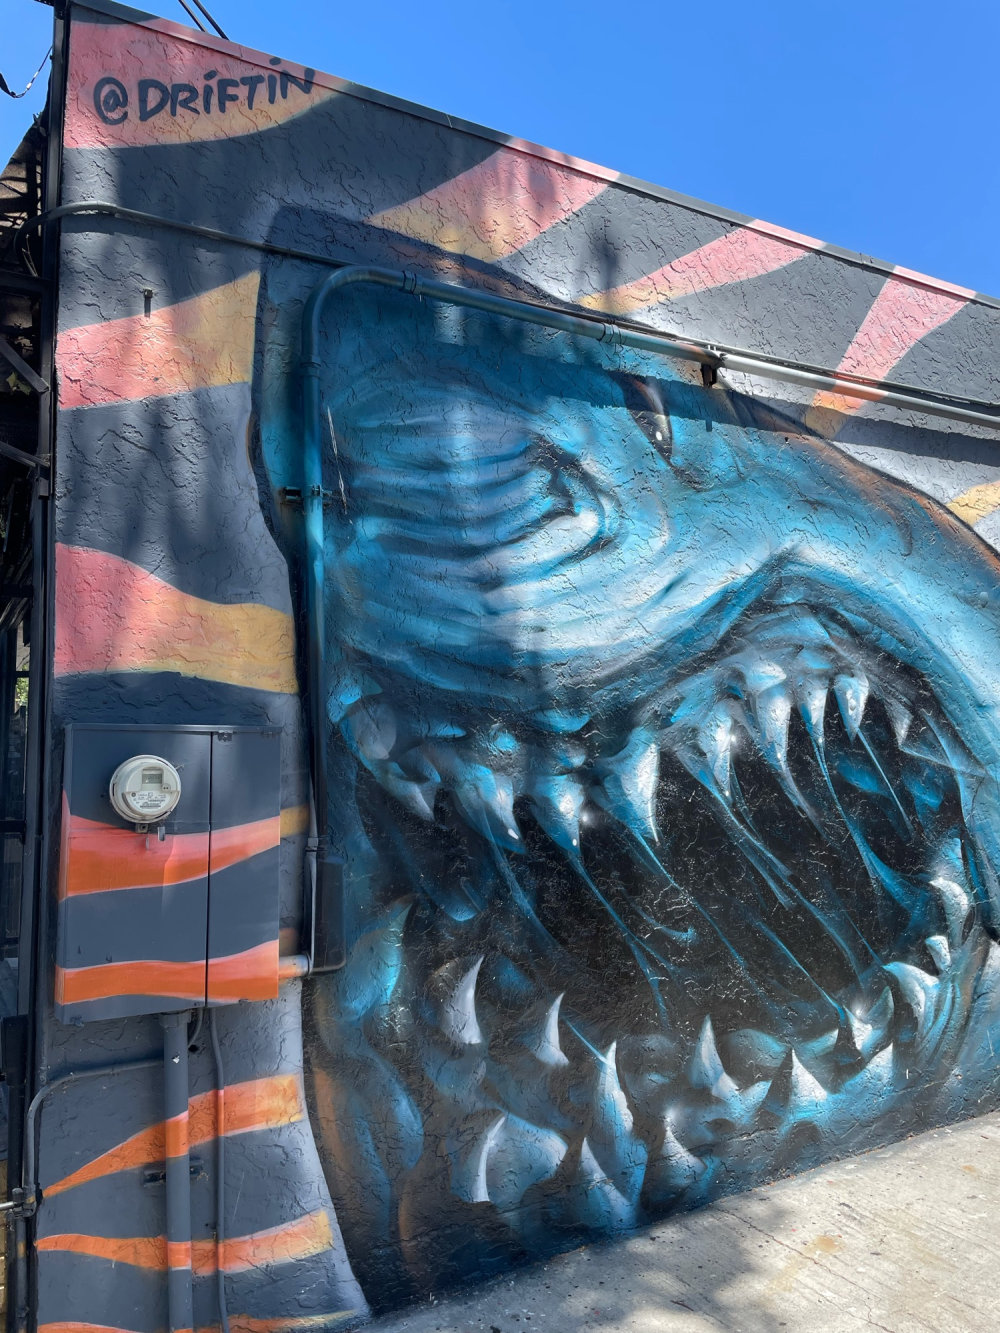 mural in San Jose by artist Driftin.